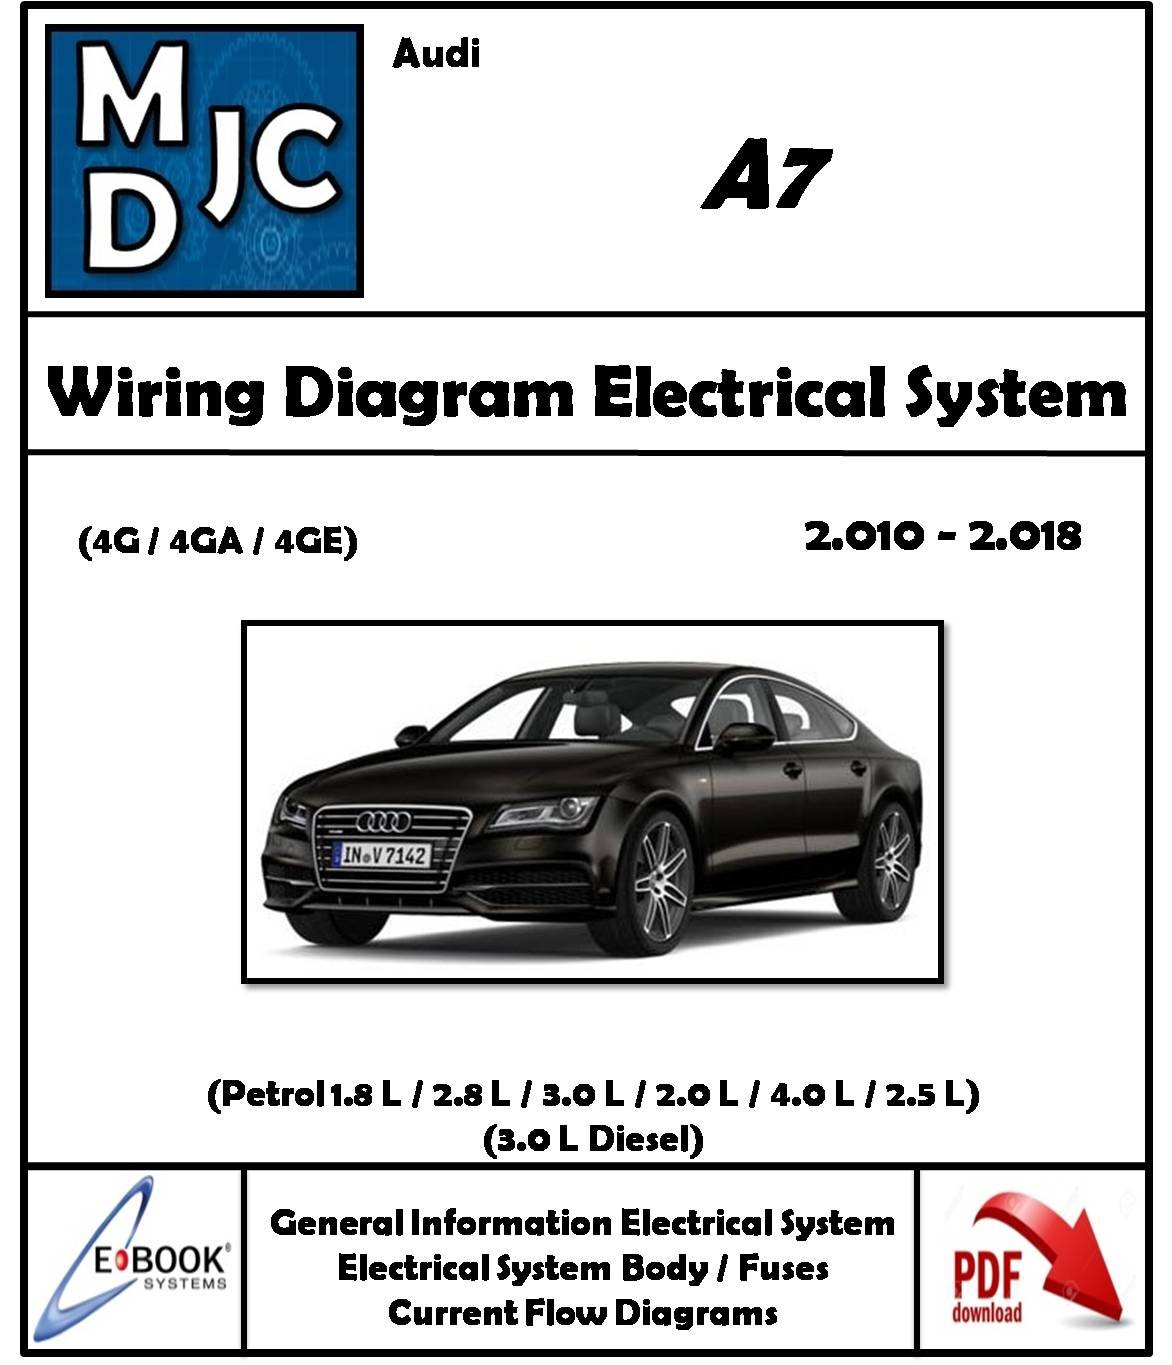 Manual Diagramas Sistema Electrico (Wiring Diagram) Audi A7 ( 4G / 4GA / 4GE ) 2010 - 2018